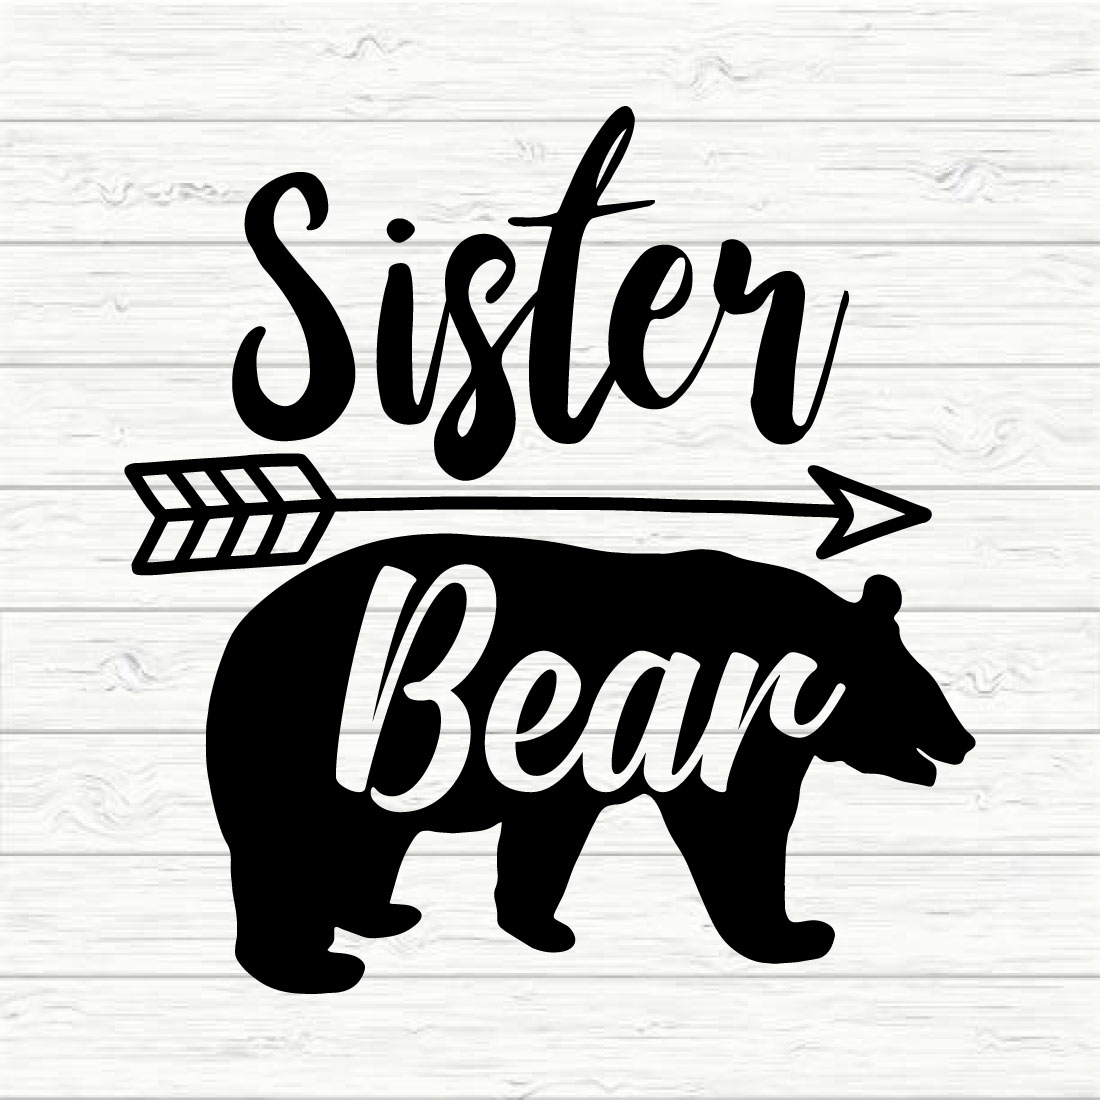 Sister Bear cover image.